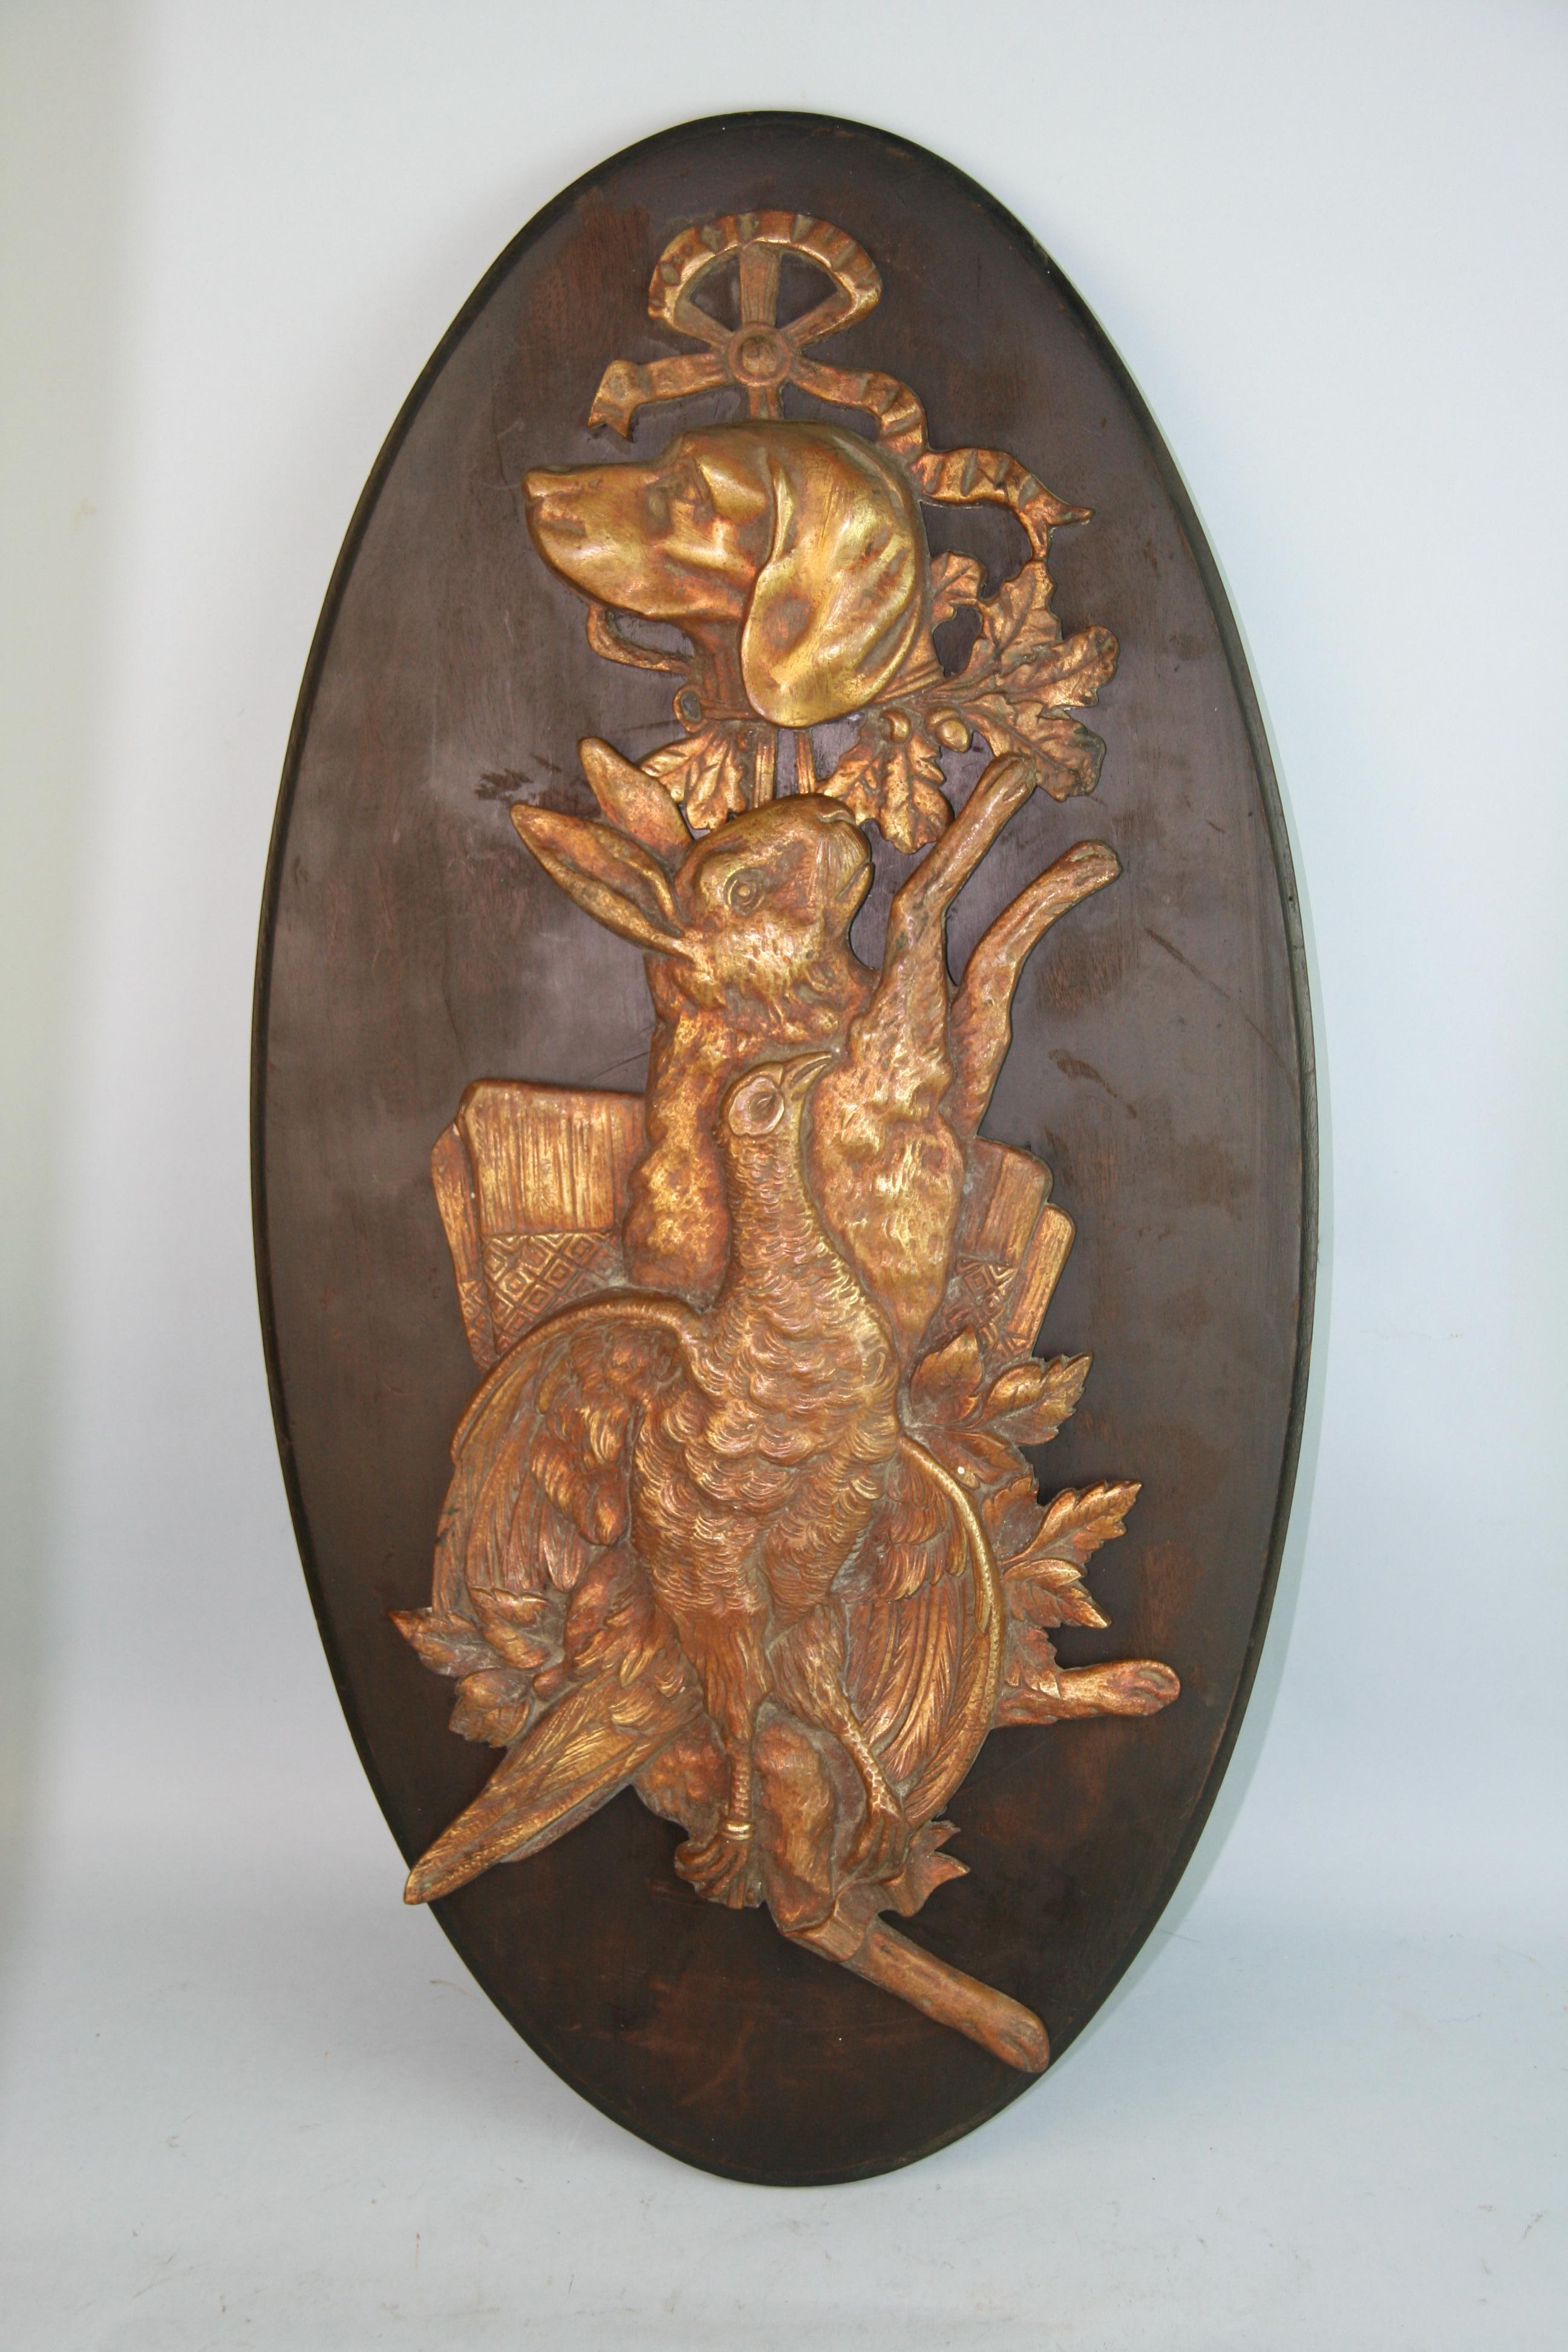 1221 Cast bronze German hunting plaque mounted on an ebonized walnut wood mounting board.